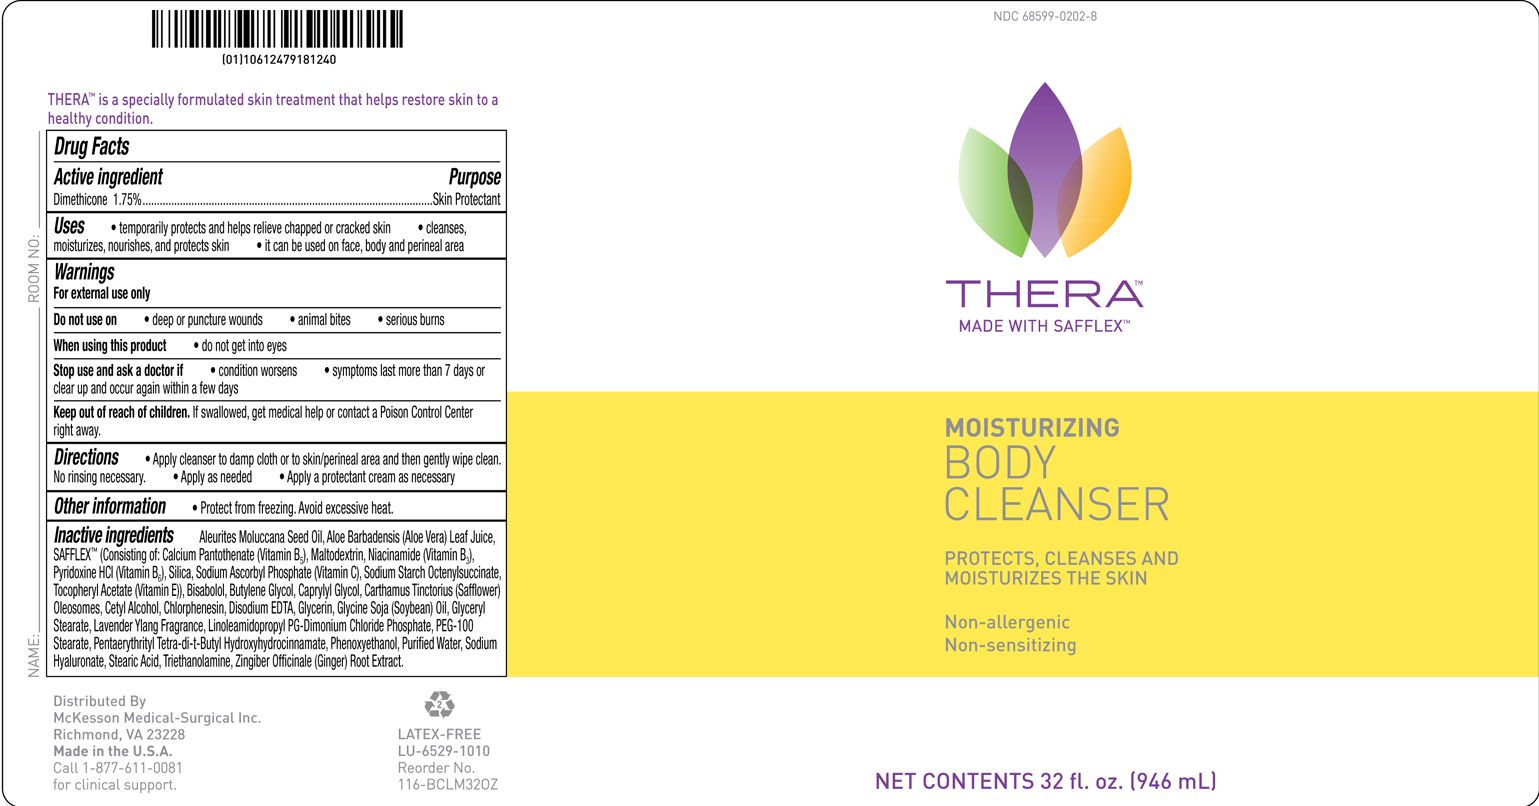 Is Thera Moisturizing Body Cleanser | Dimethicone Liquid safe while breastfeeding